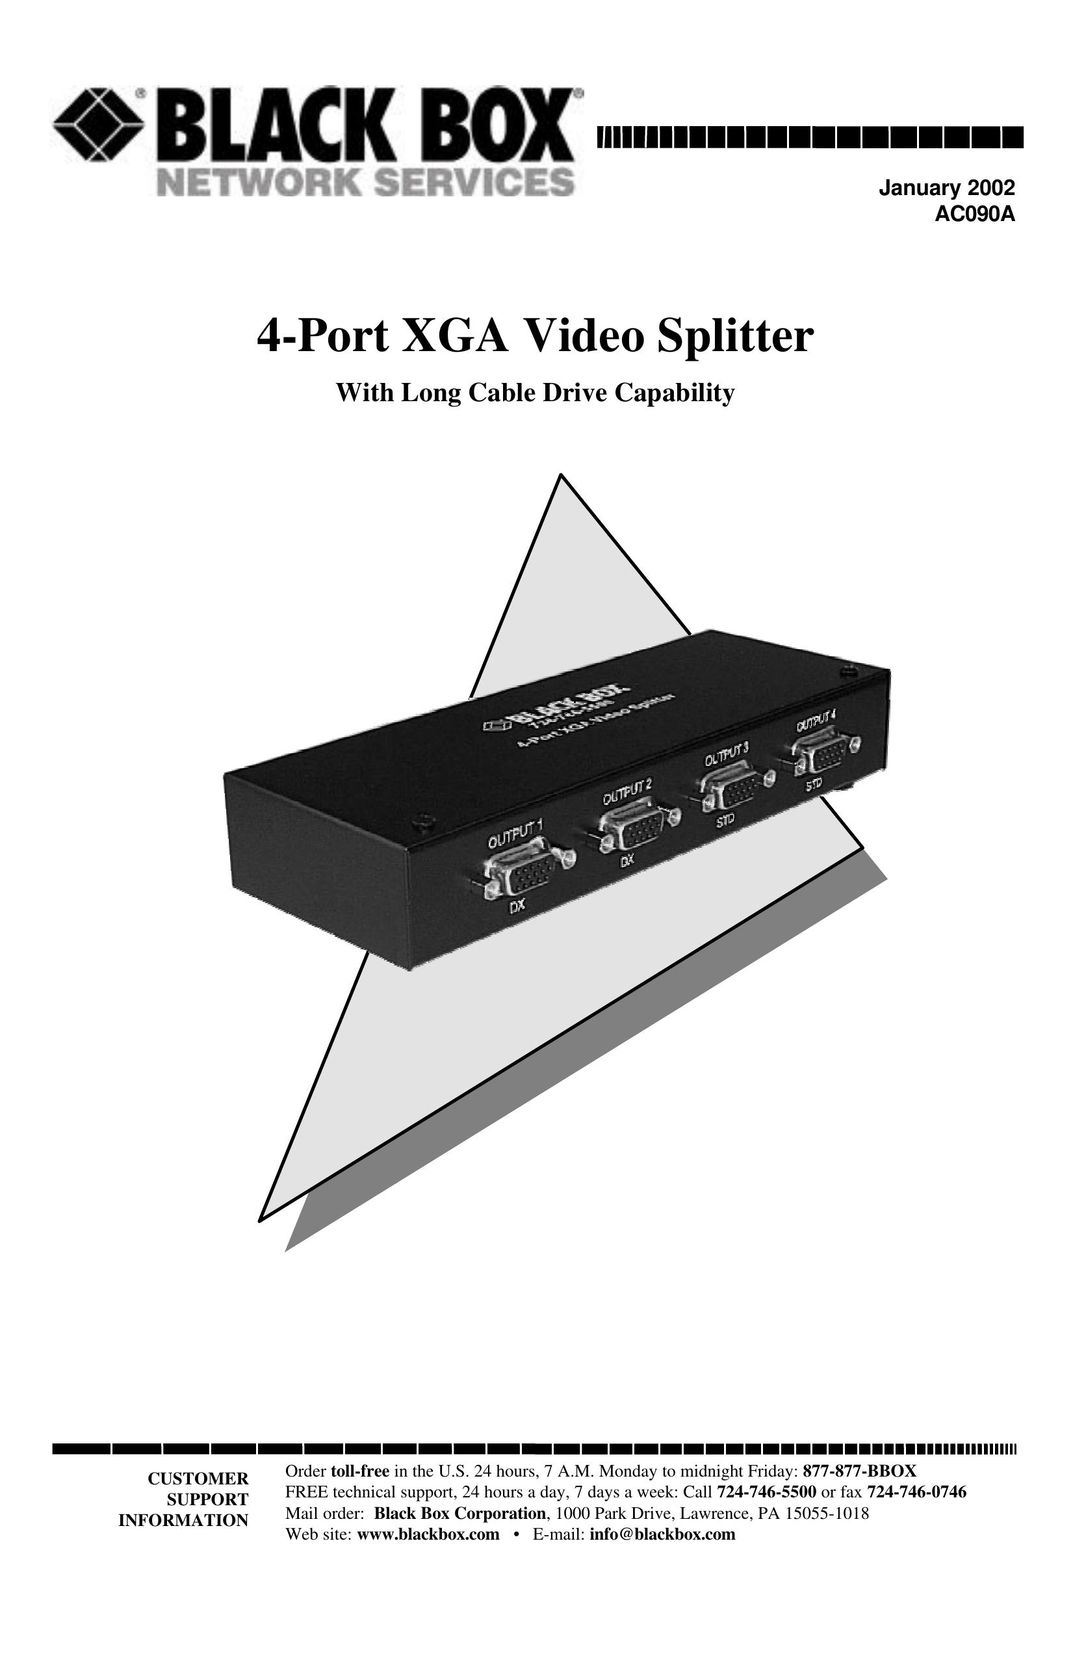 Black Box 4-Port XGA Video Splitter TV Video Accessories User Manual